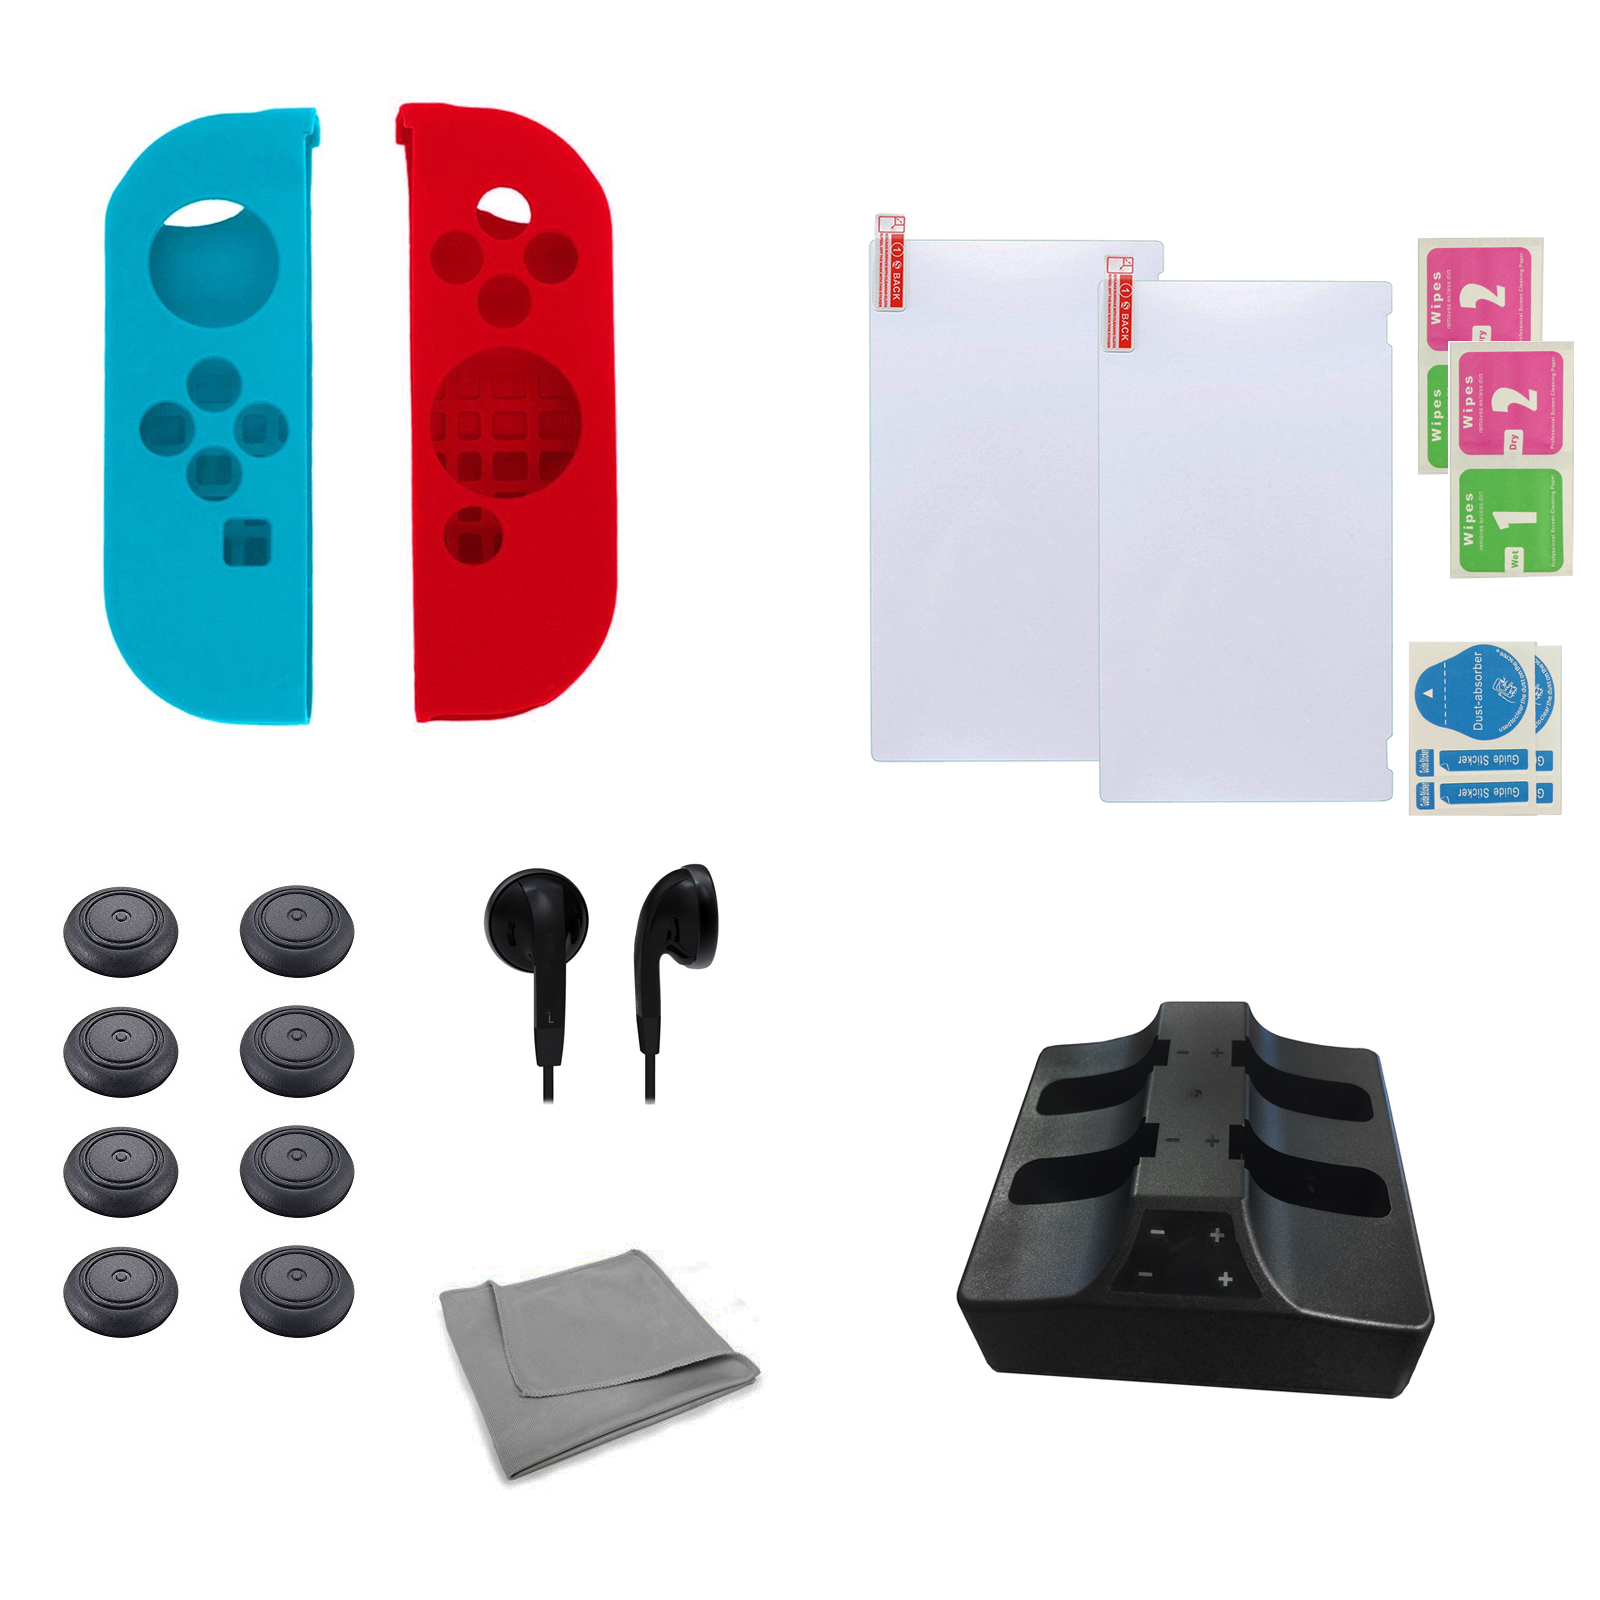 GameFitz 18 in 1 Accessories Kit for Nintendo Switch